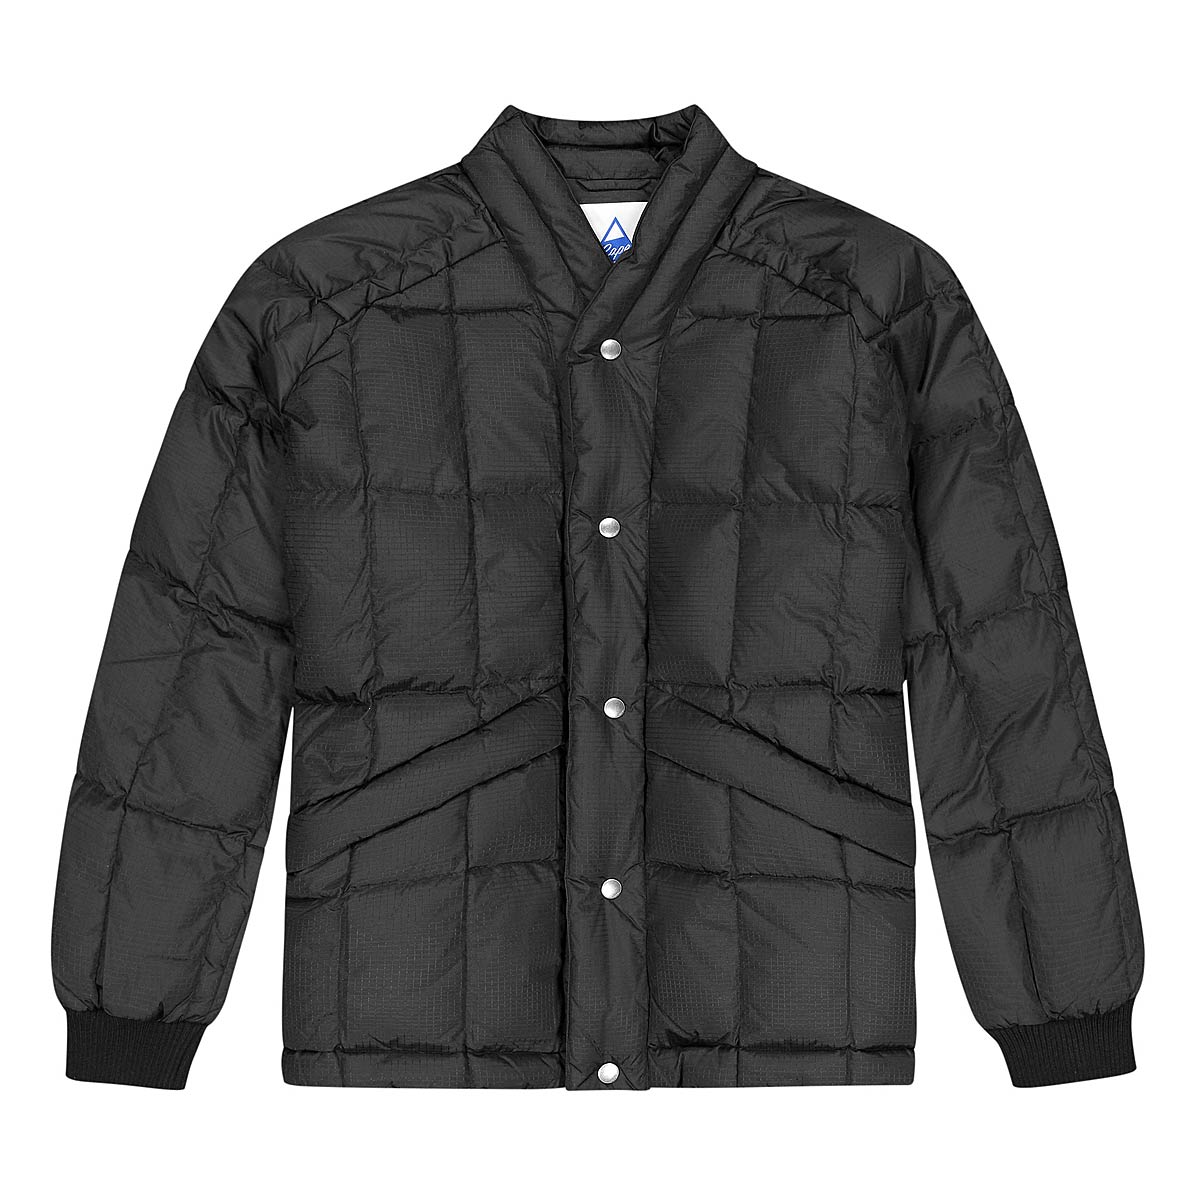 Ymc South Downs Coat, Black